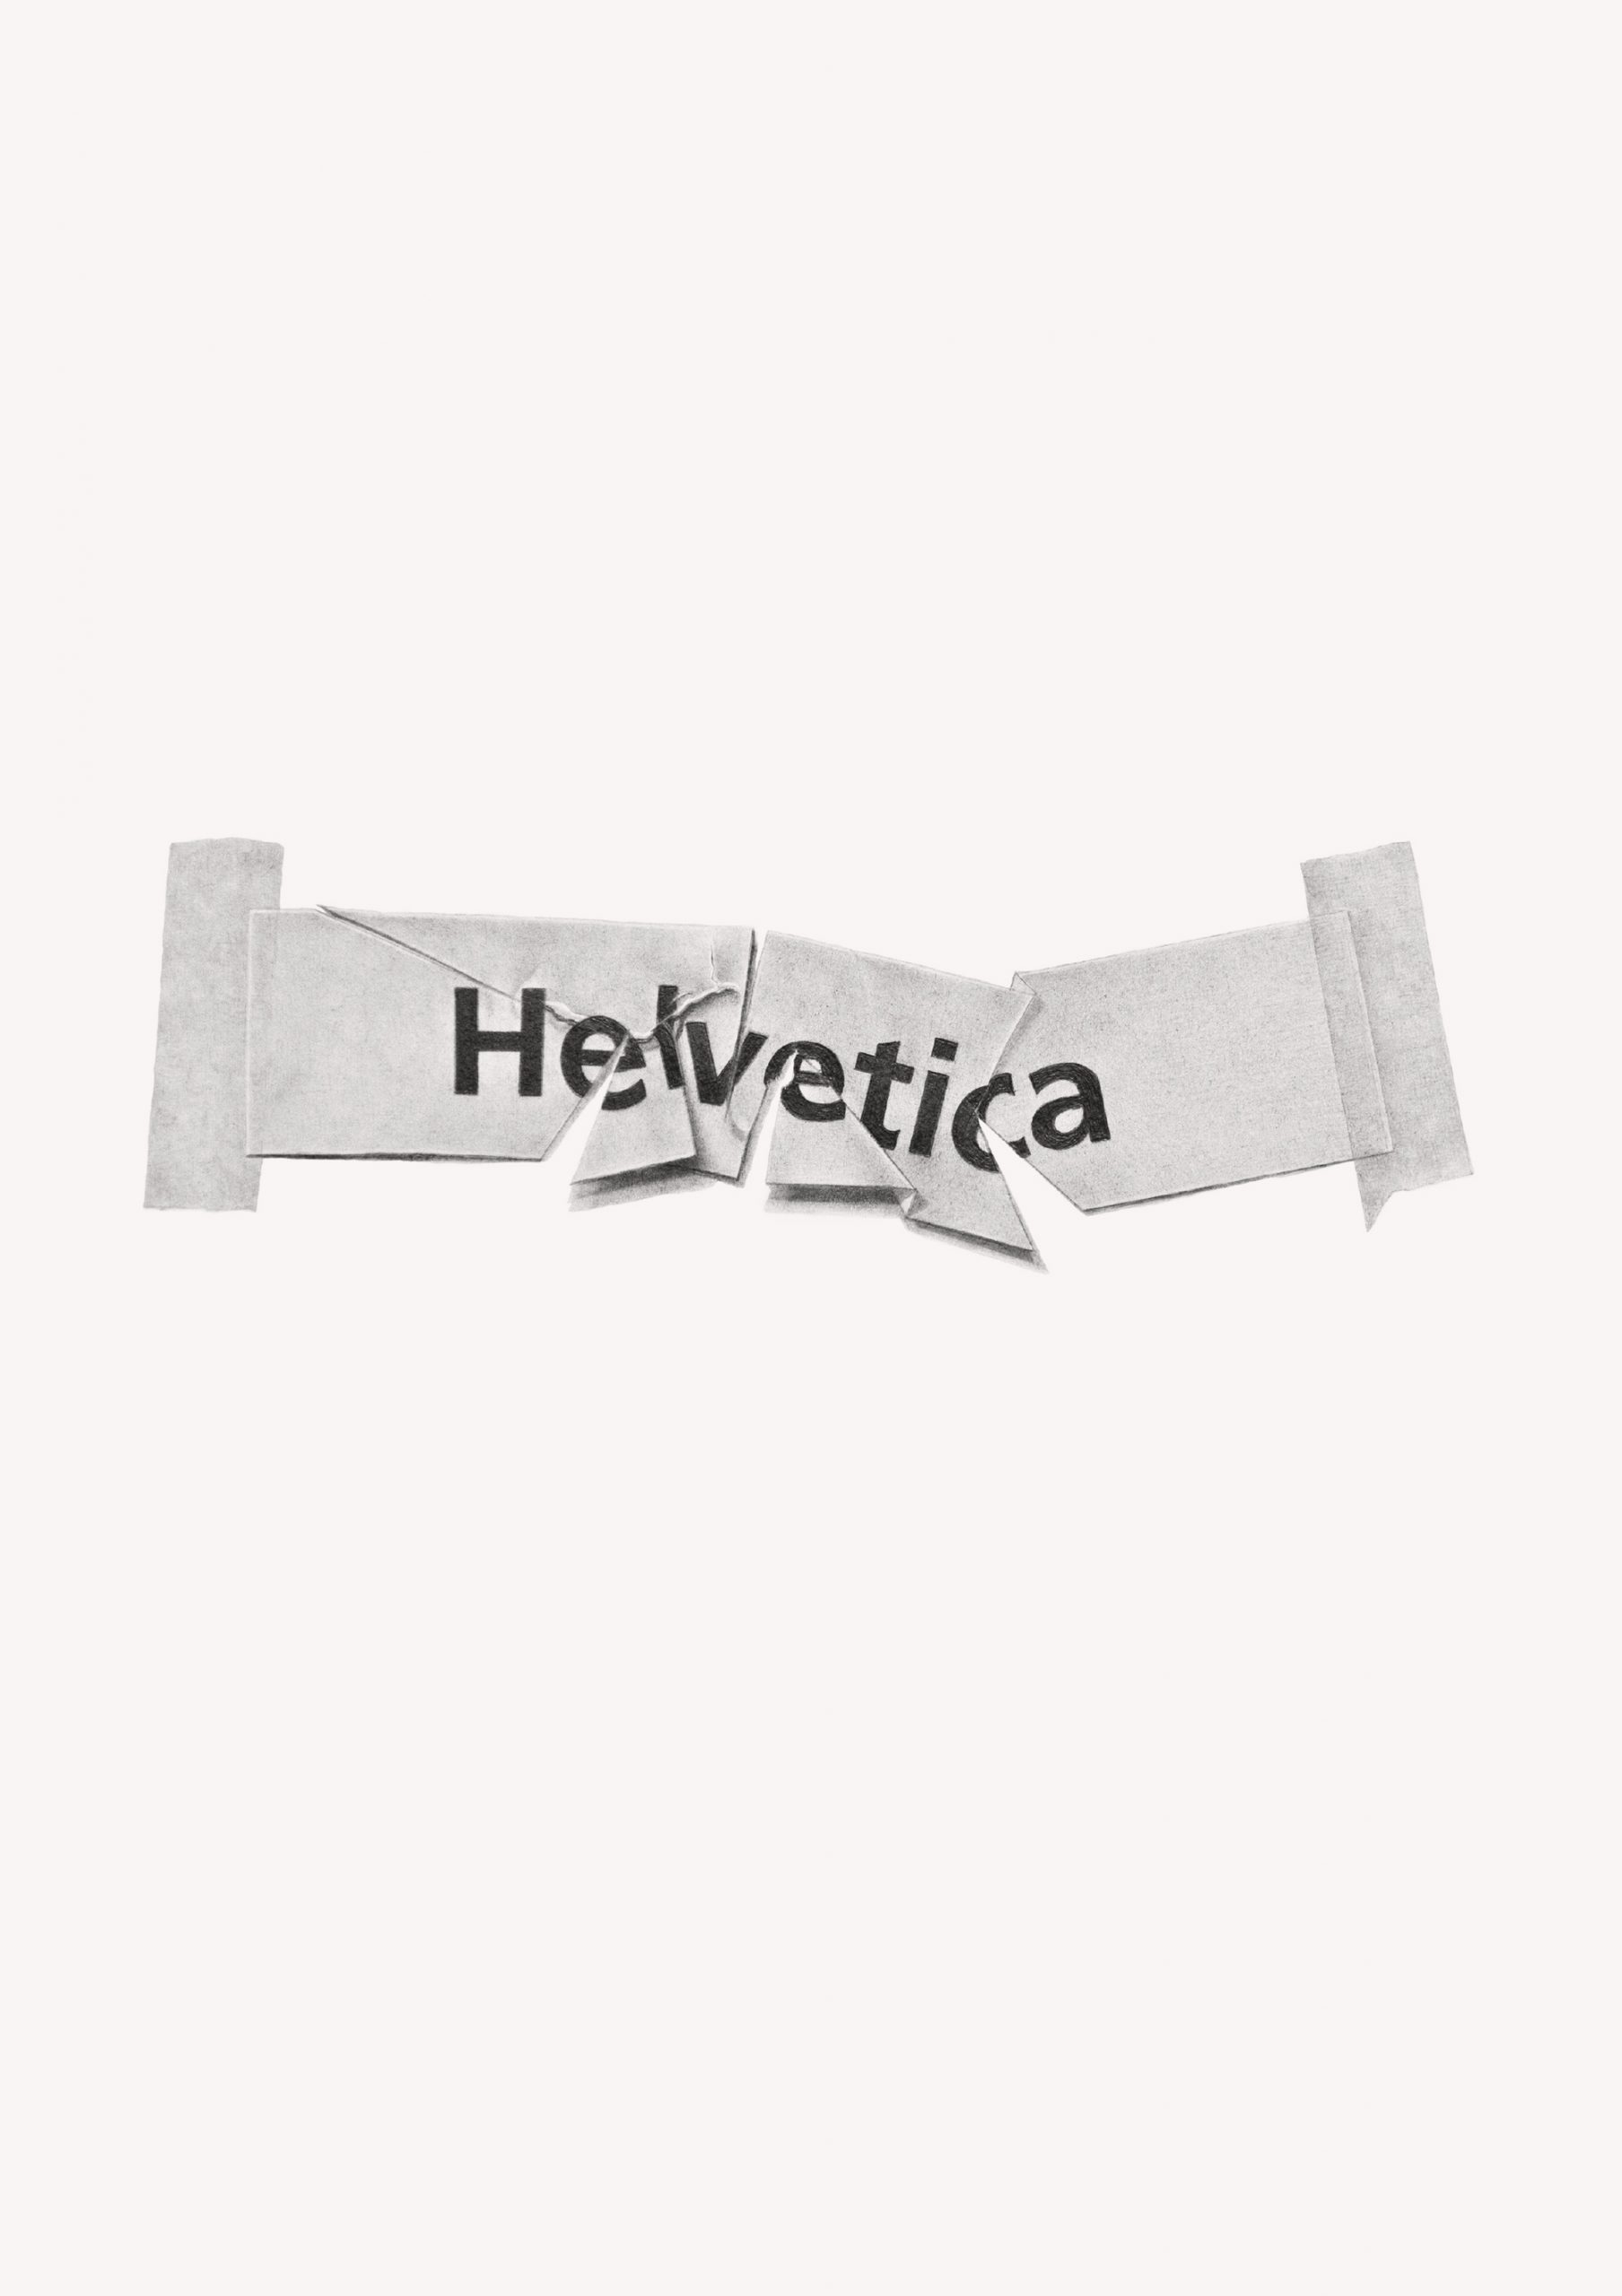 Helvetica Illustrated Riso Print – Rosanna Schaub